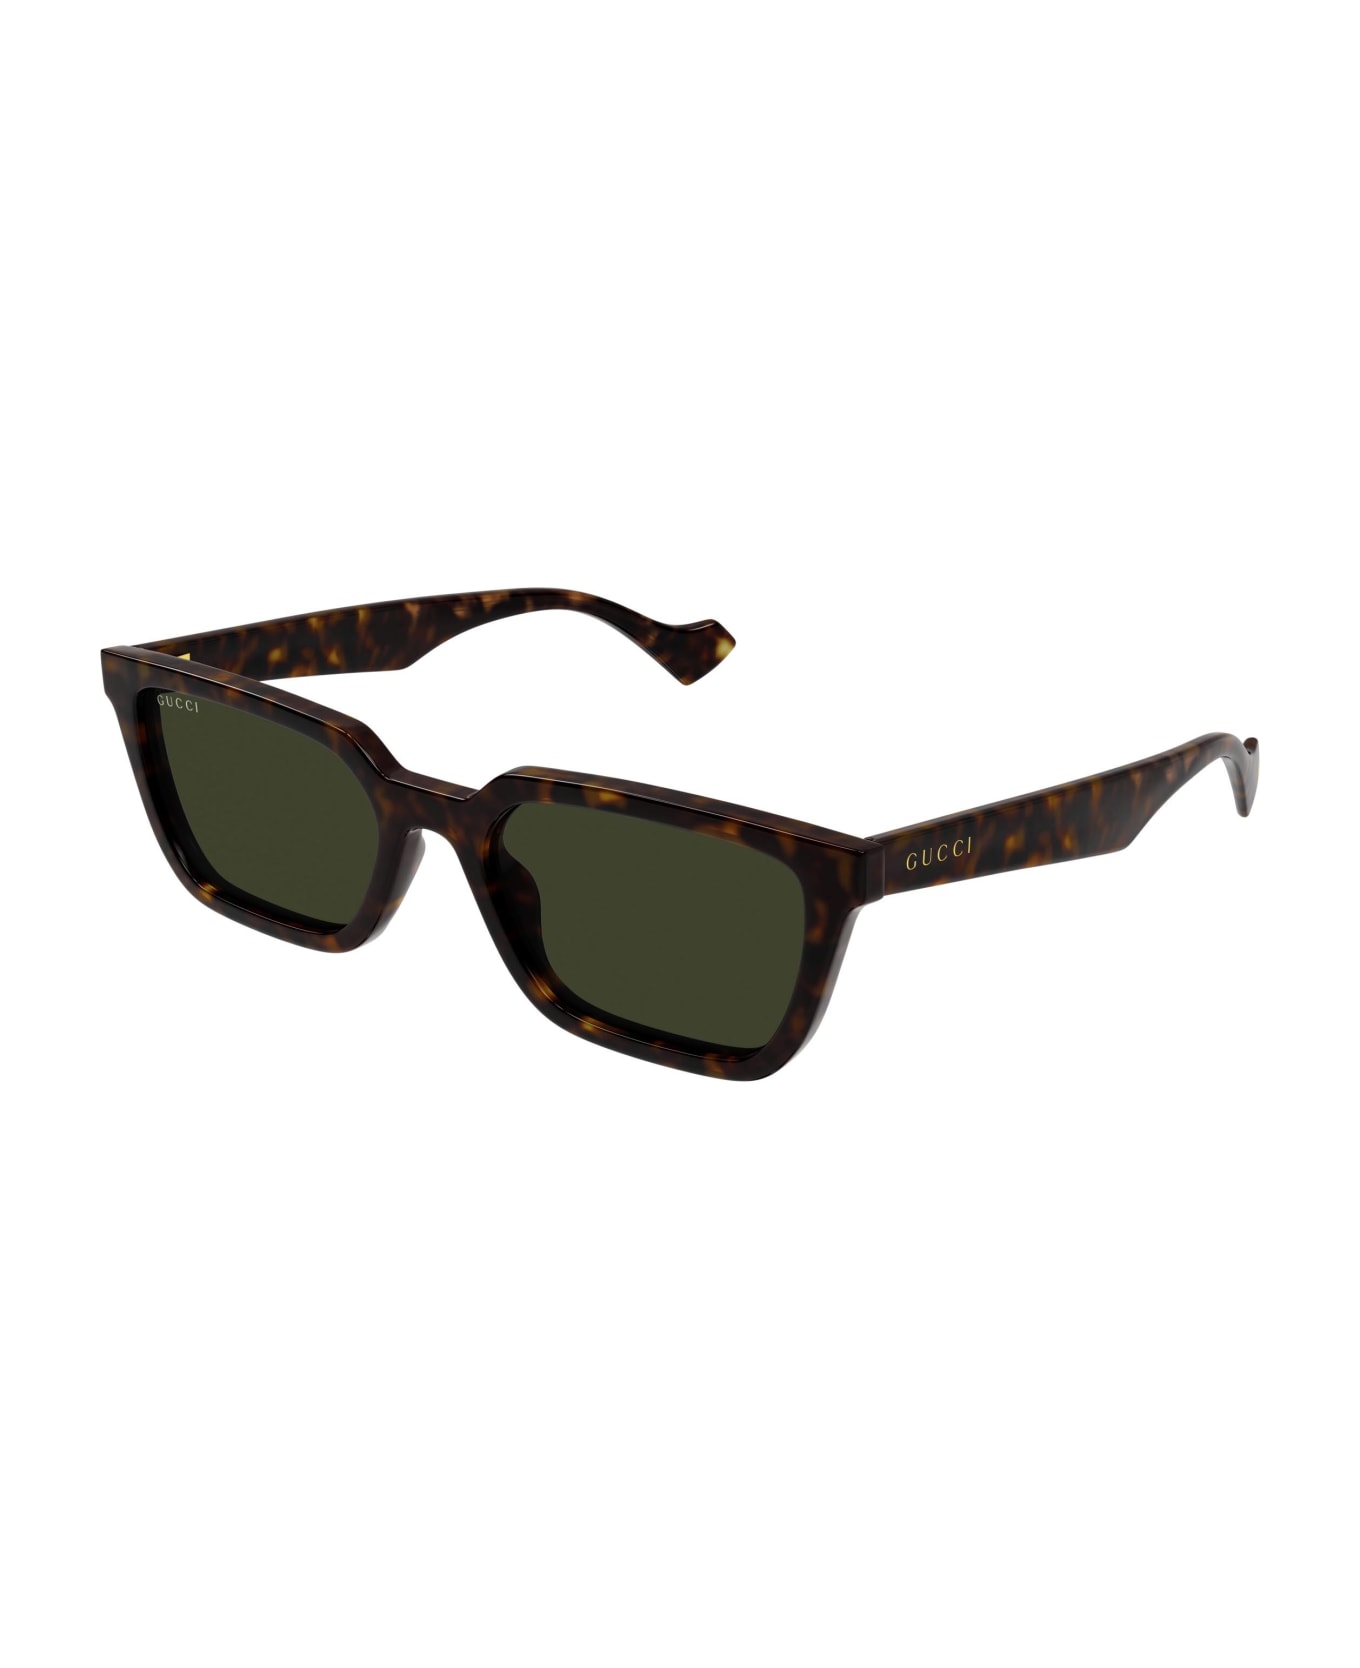 Gucci Eyewear Sunglasses - Havana/Verde